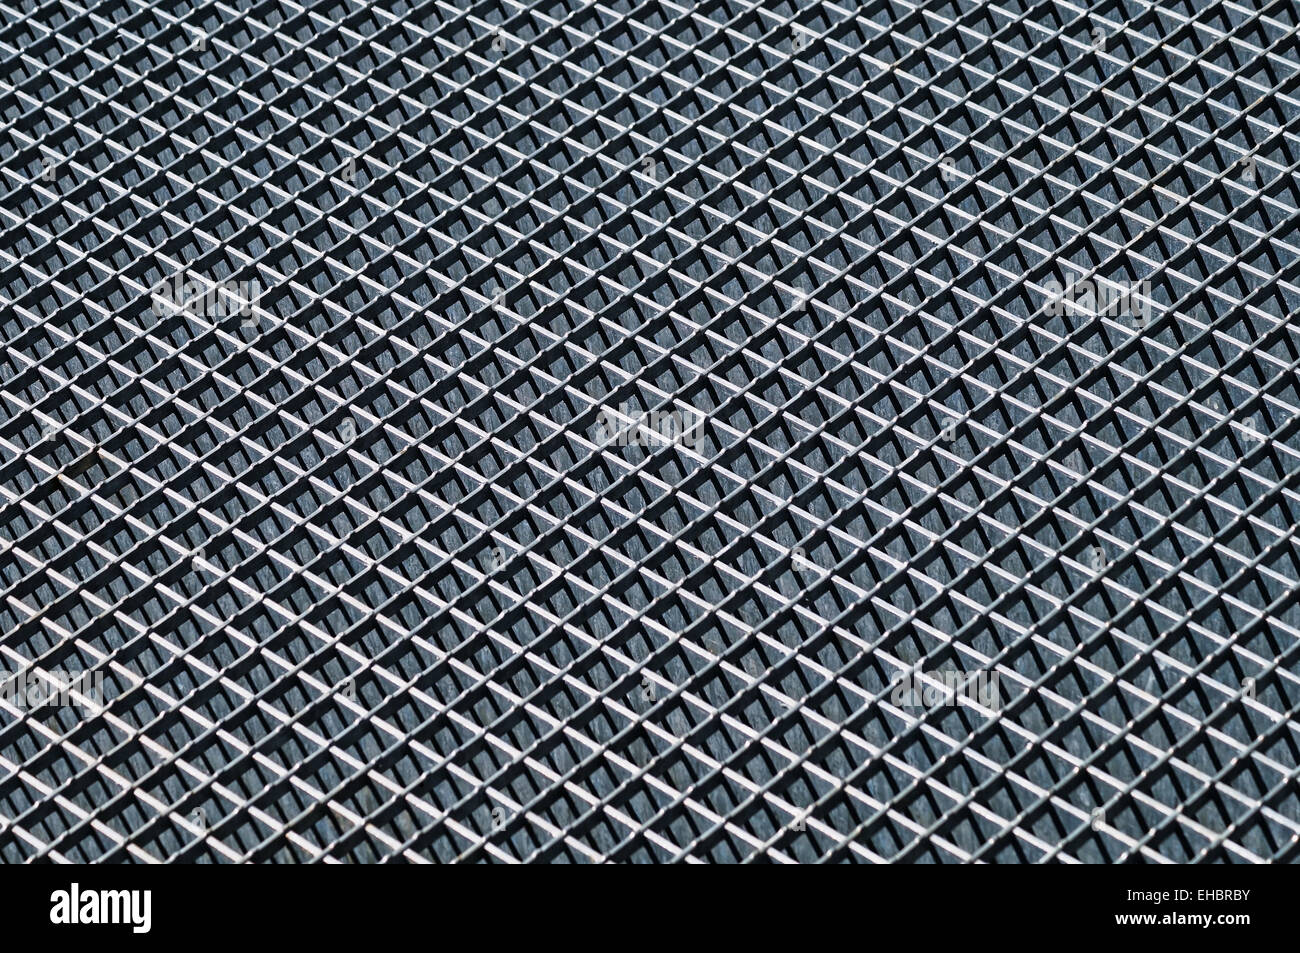 Metal grid pattern background Stock Photo